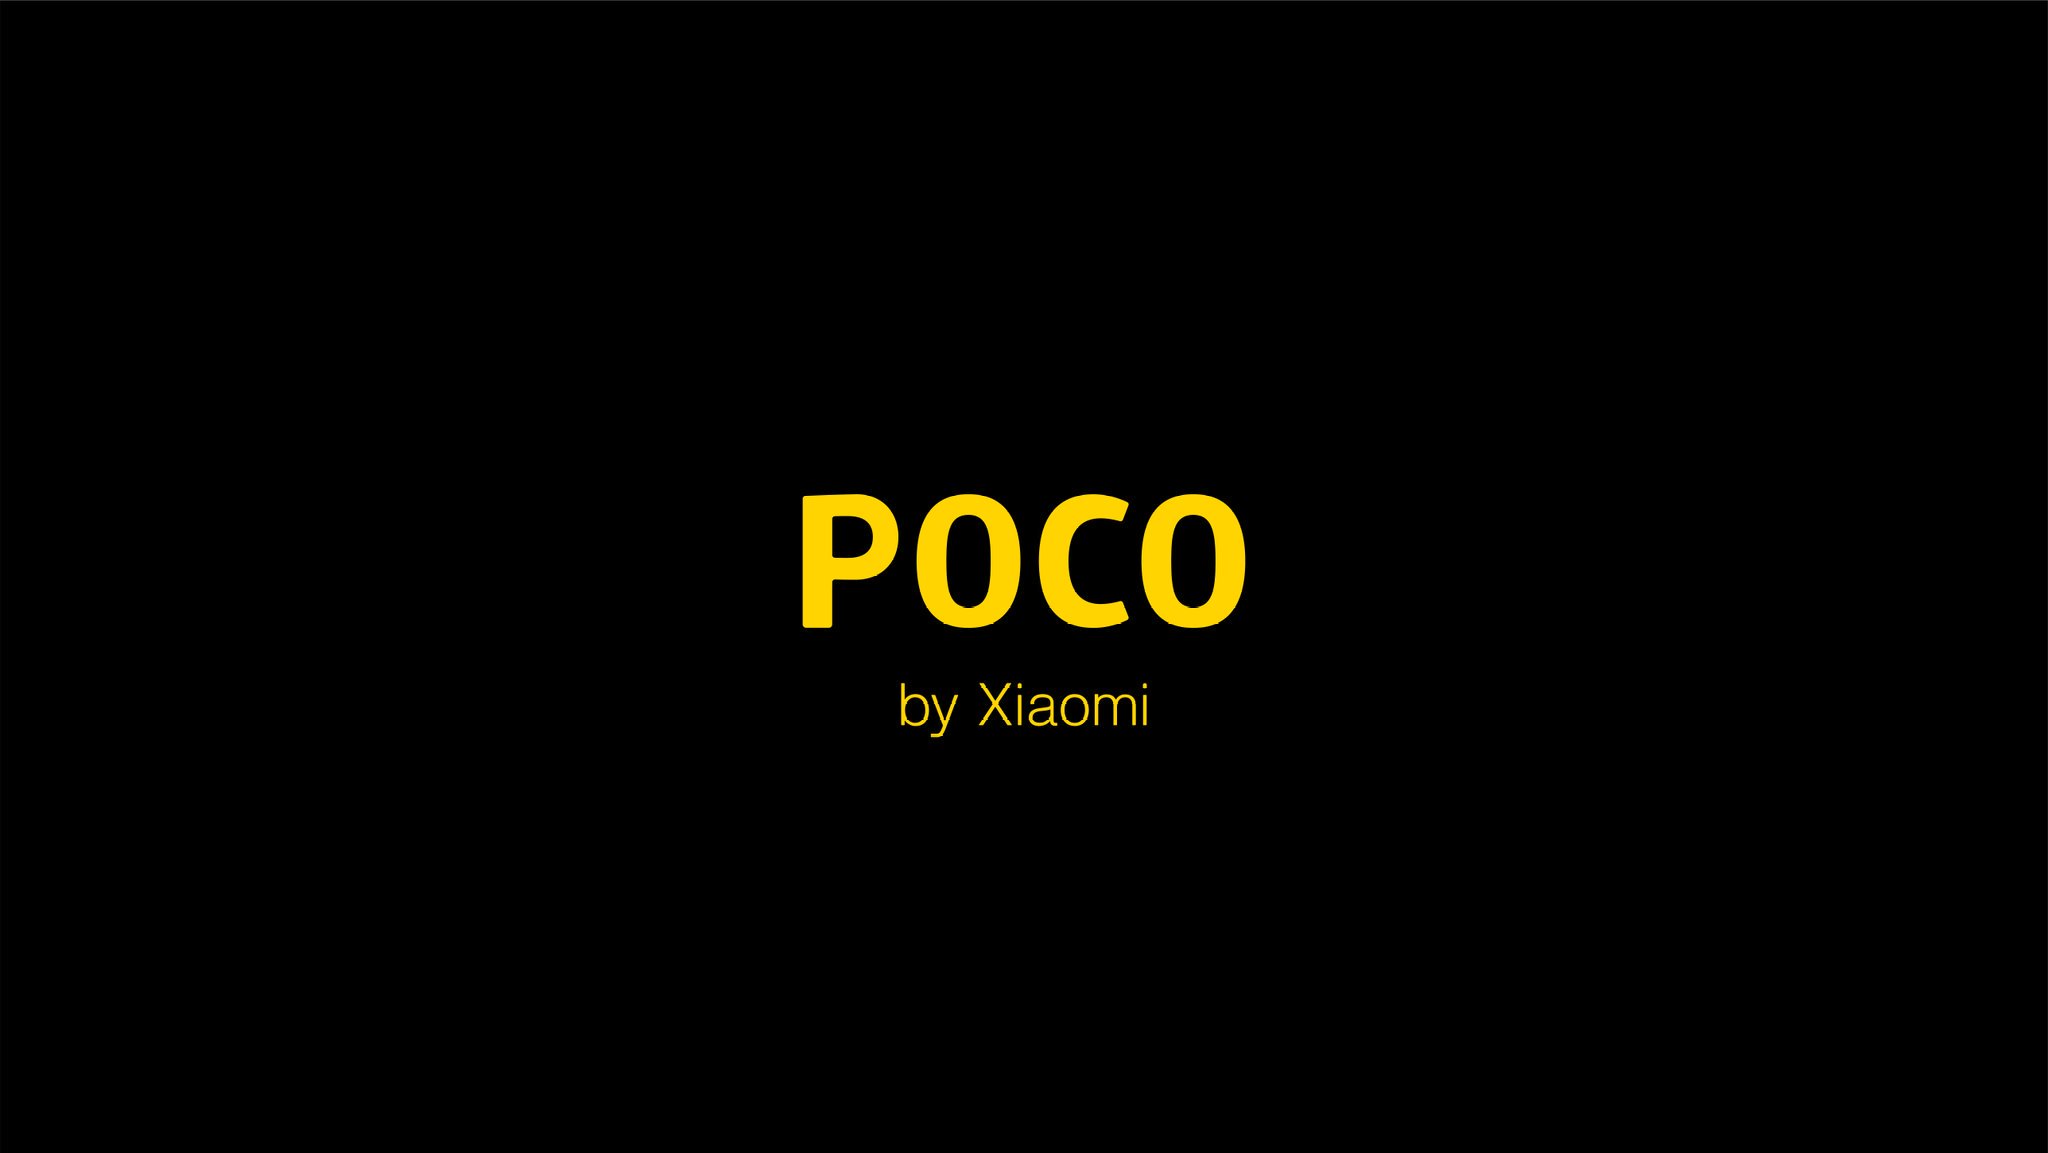 [June update] Poco F1 (Pocophone F1) updates to slow down, is Poco F2 (Pocophone F2) coming?